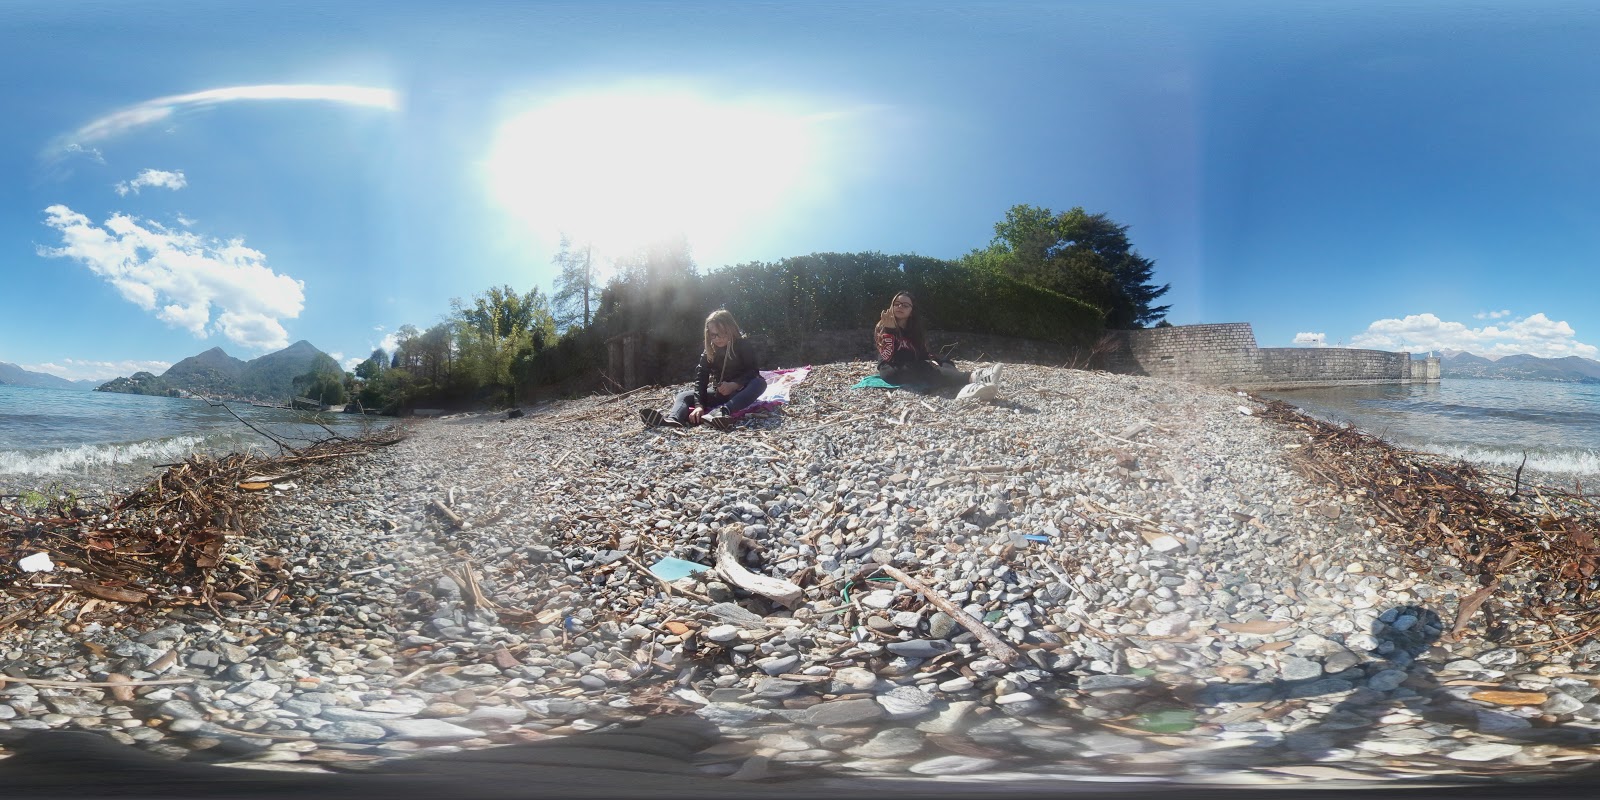 Spiaggia del Fortino的照片 带有岩石覆盖表面